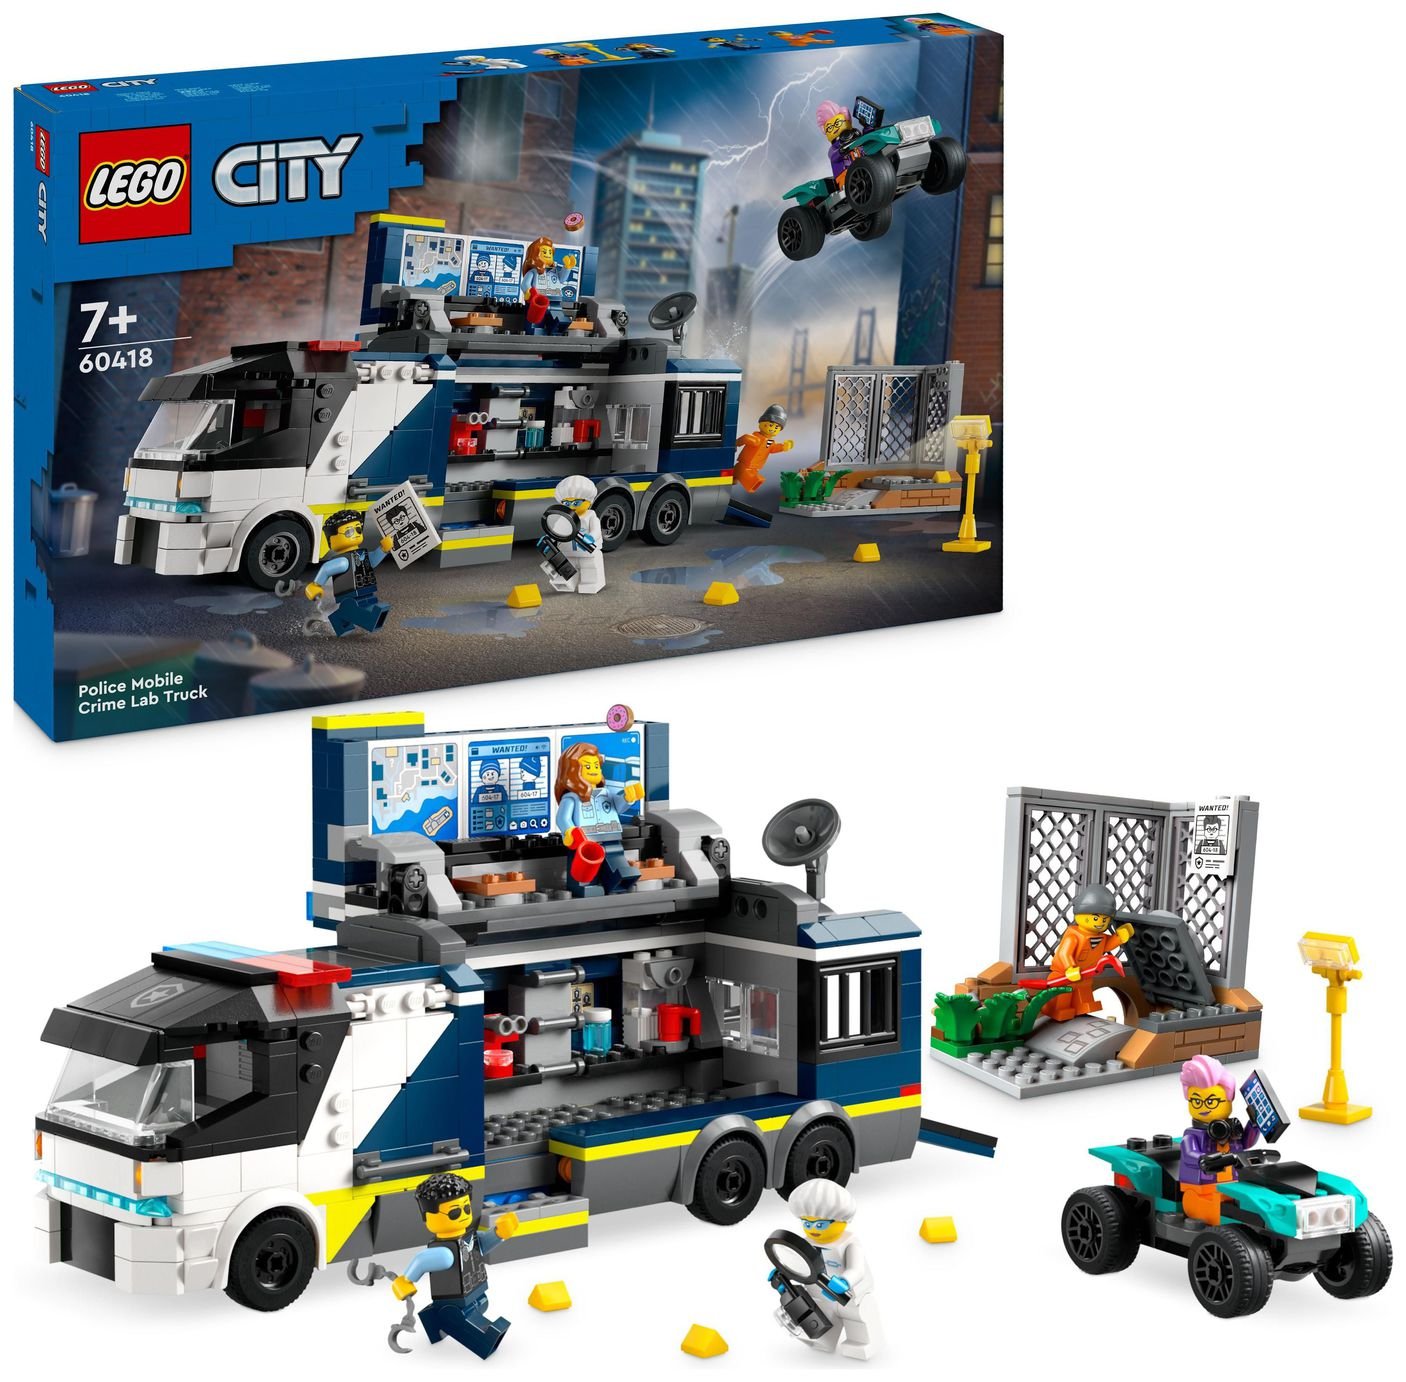 LEGO City Police Mobile Crime Lab Truck Toy Set 60418